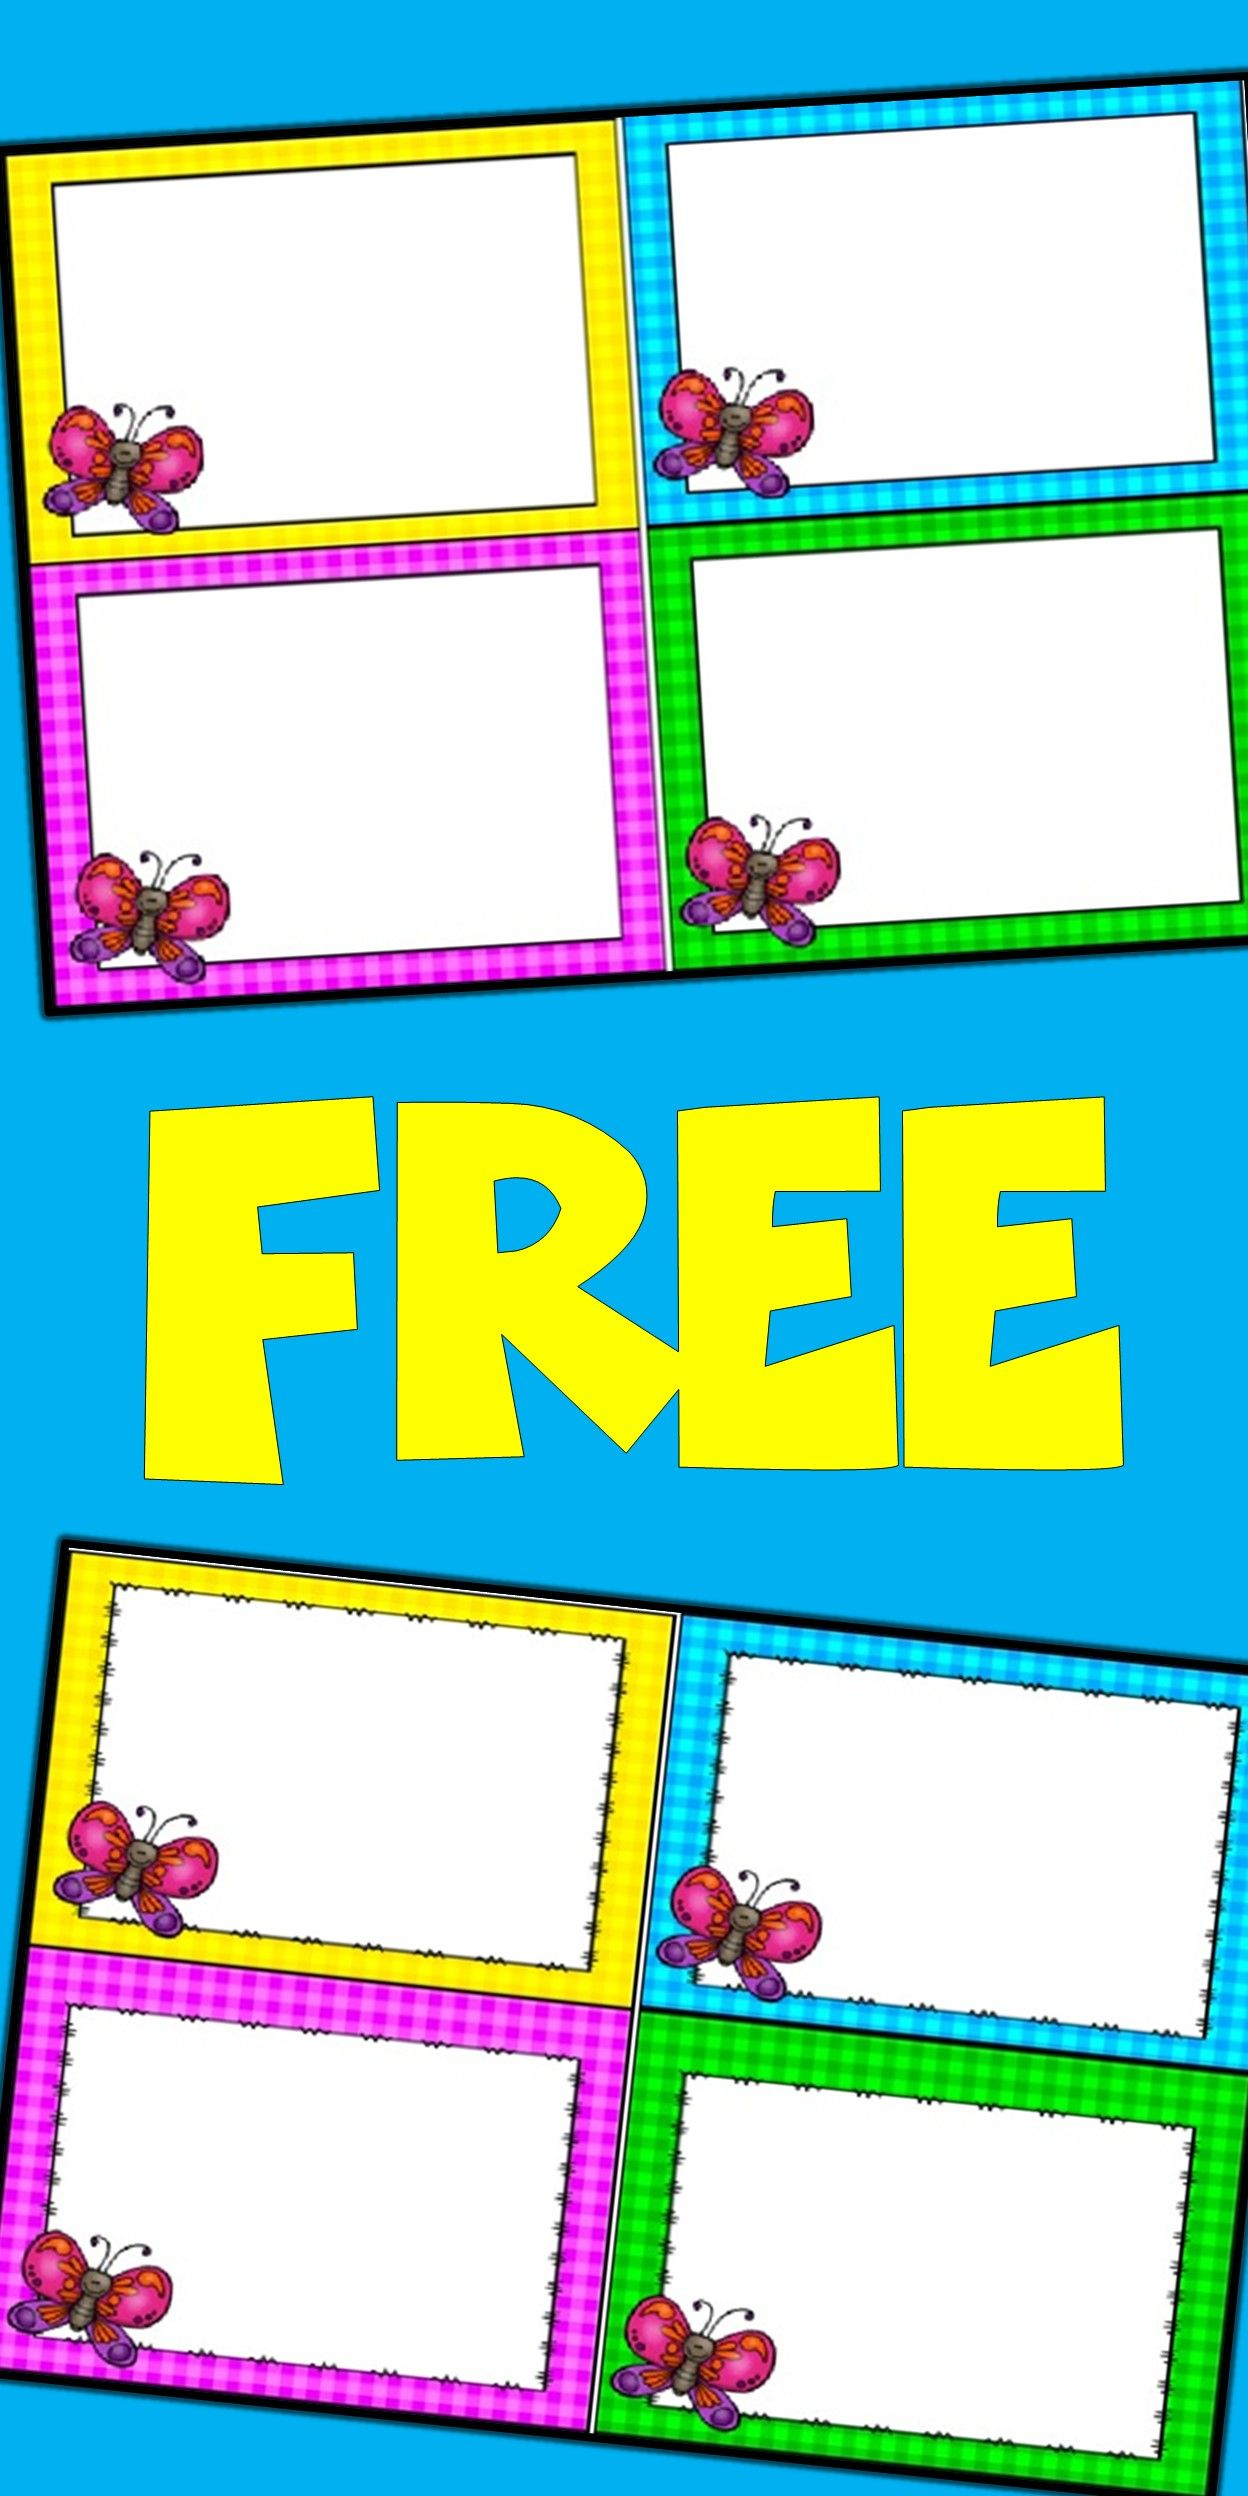 Free Editable Spring Card Templates | Butterflies | Pinterest - Free Printable Blank Task Cards